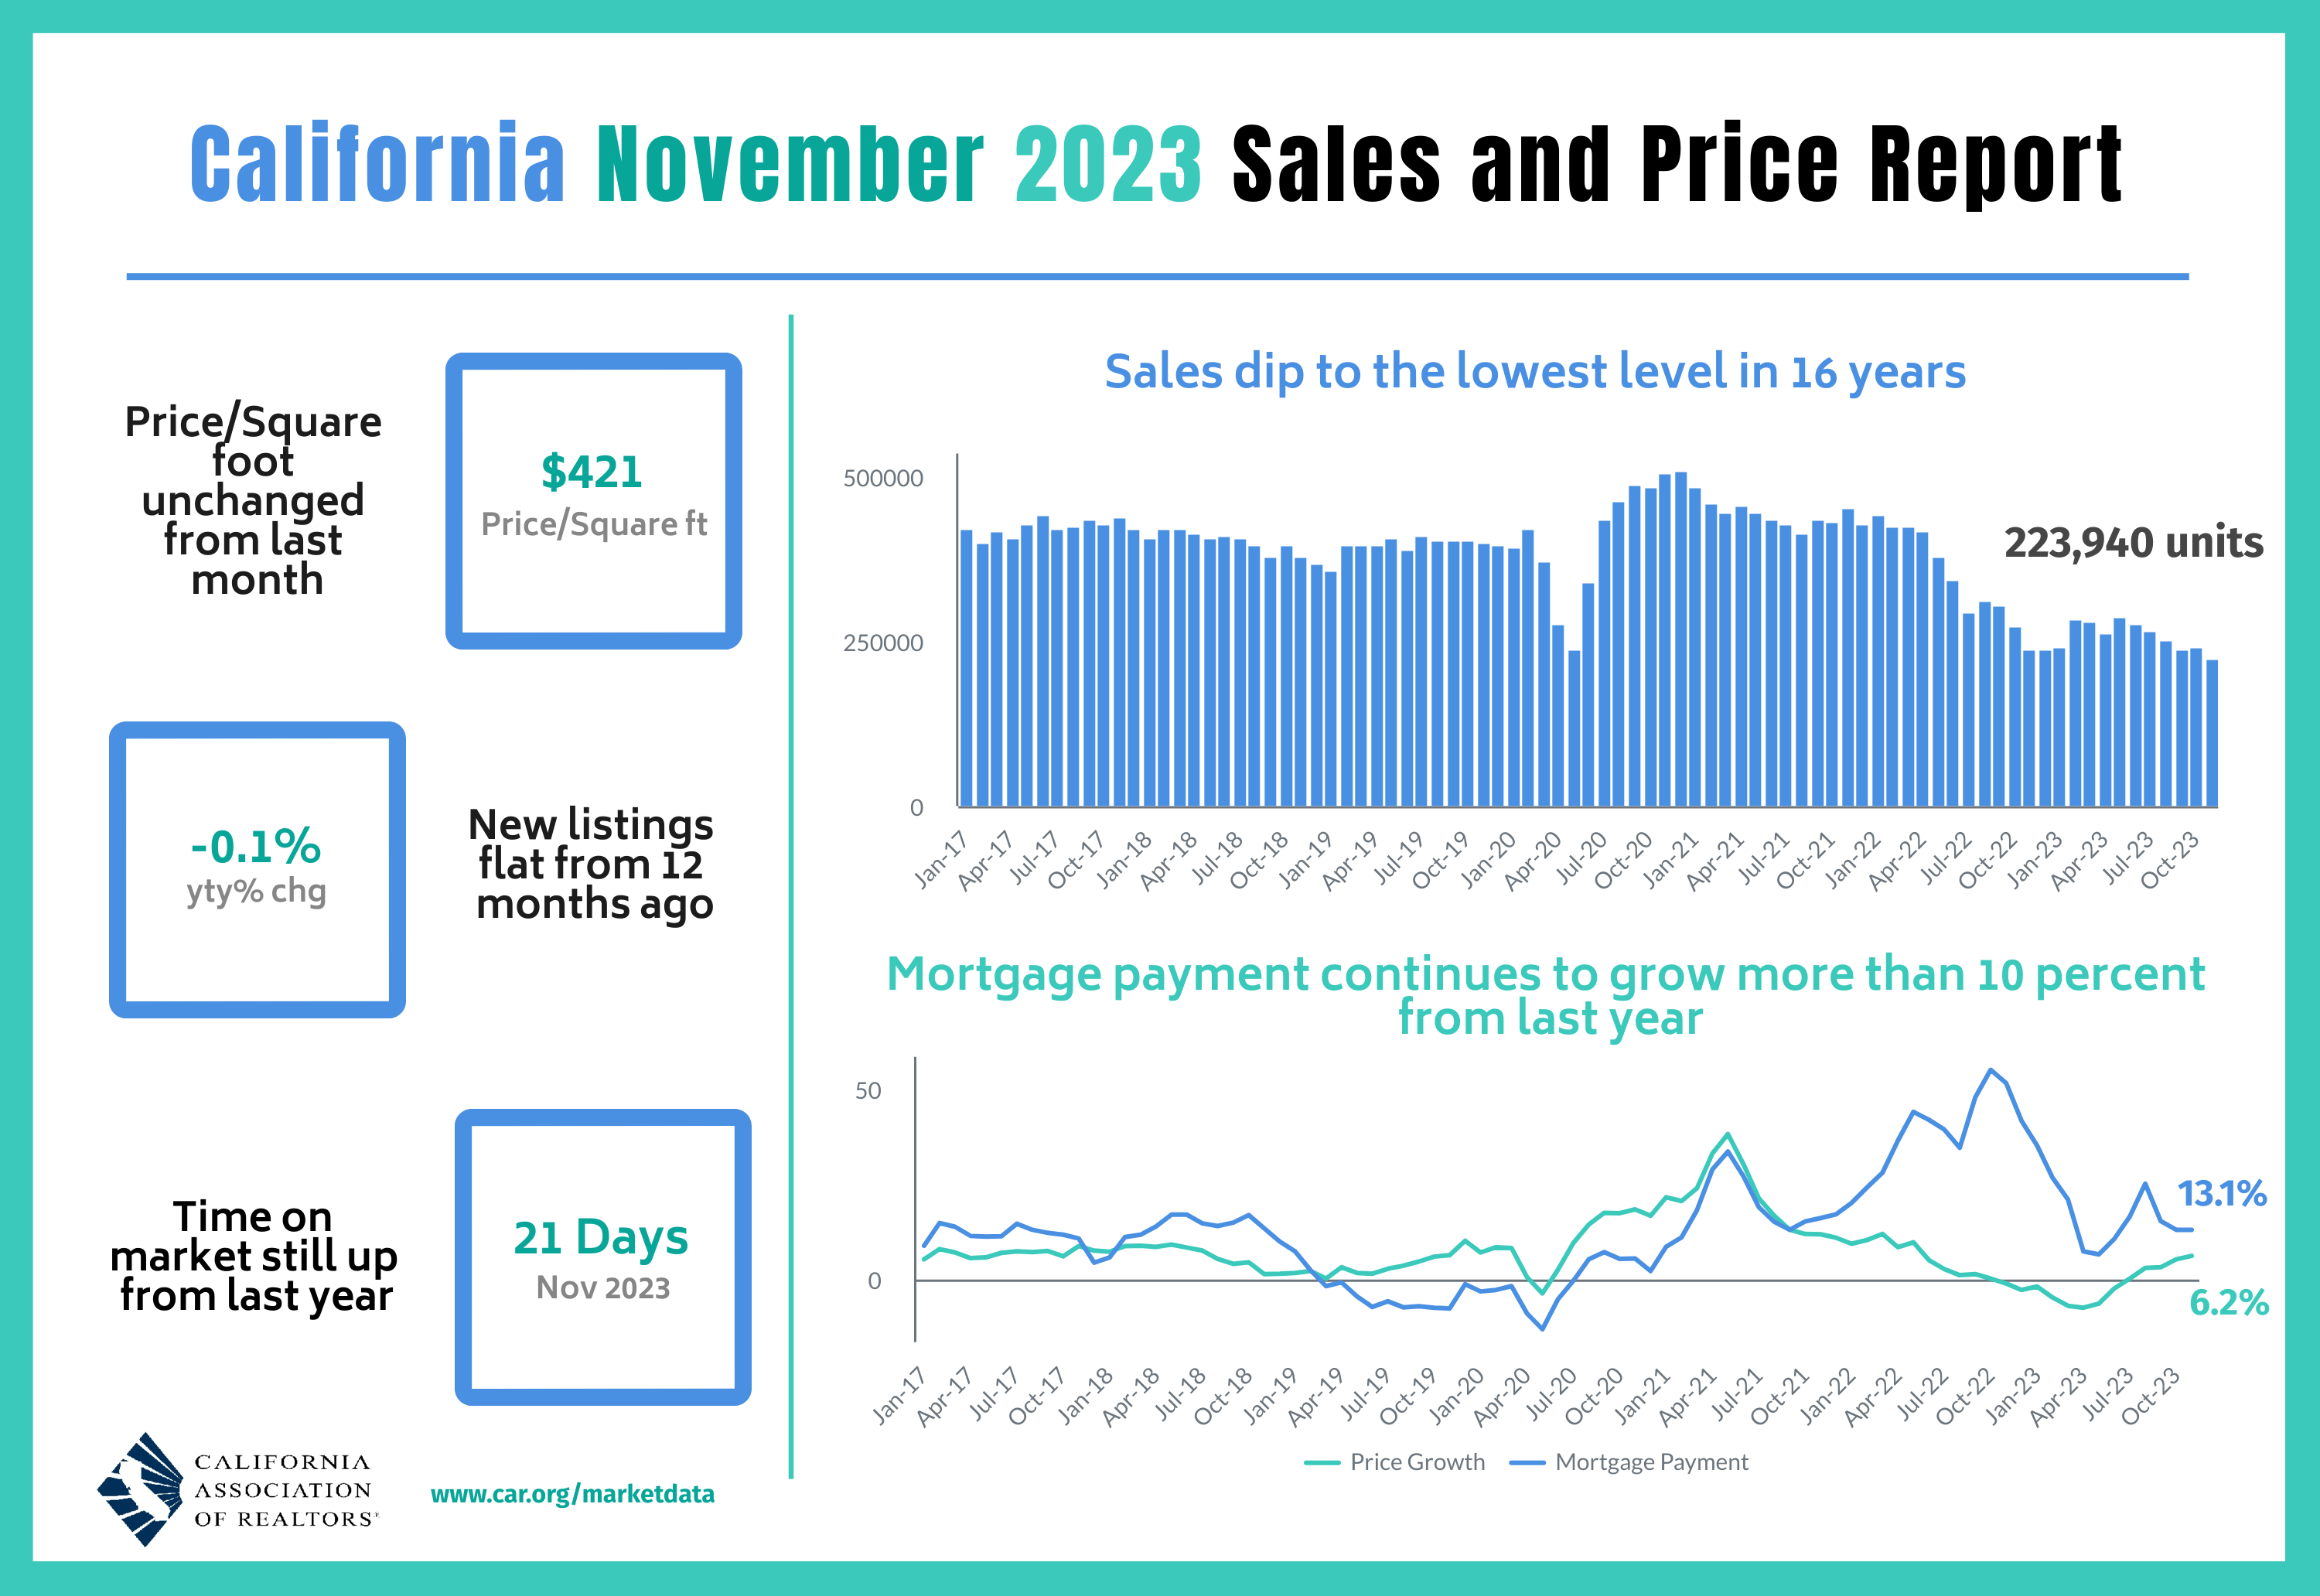 California housing affordability dials back